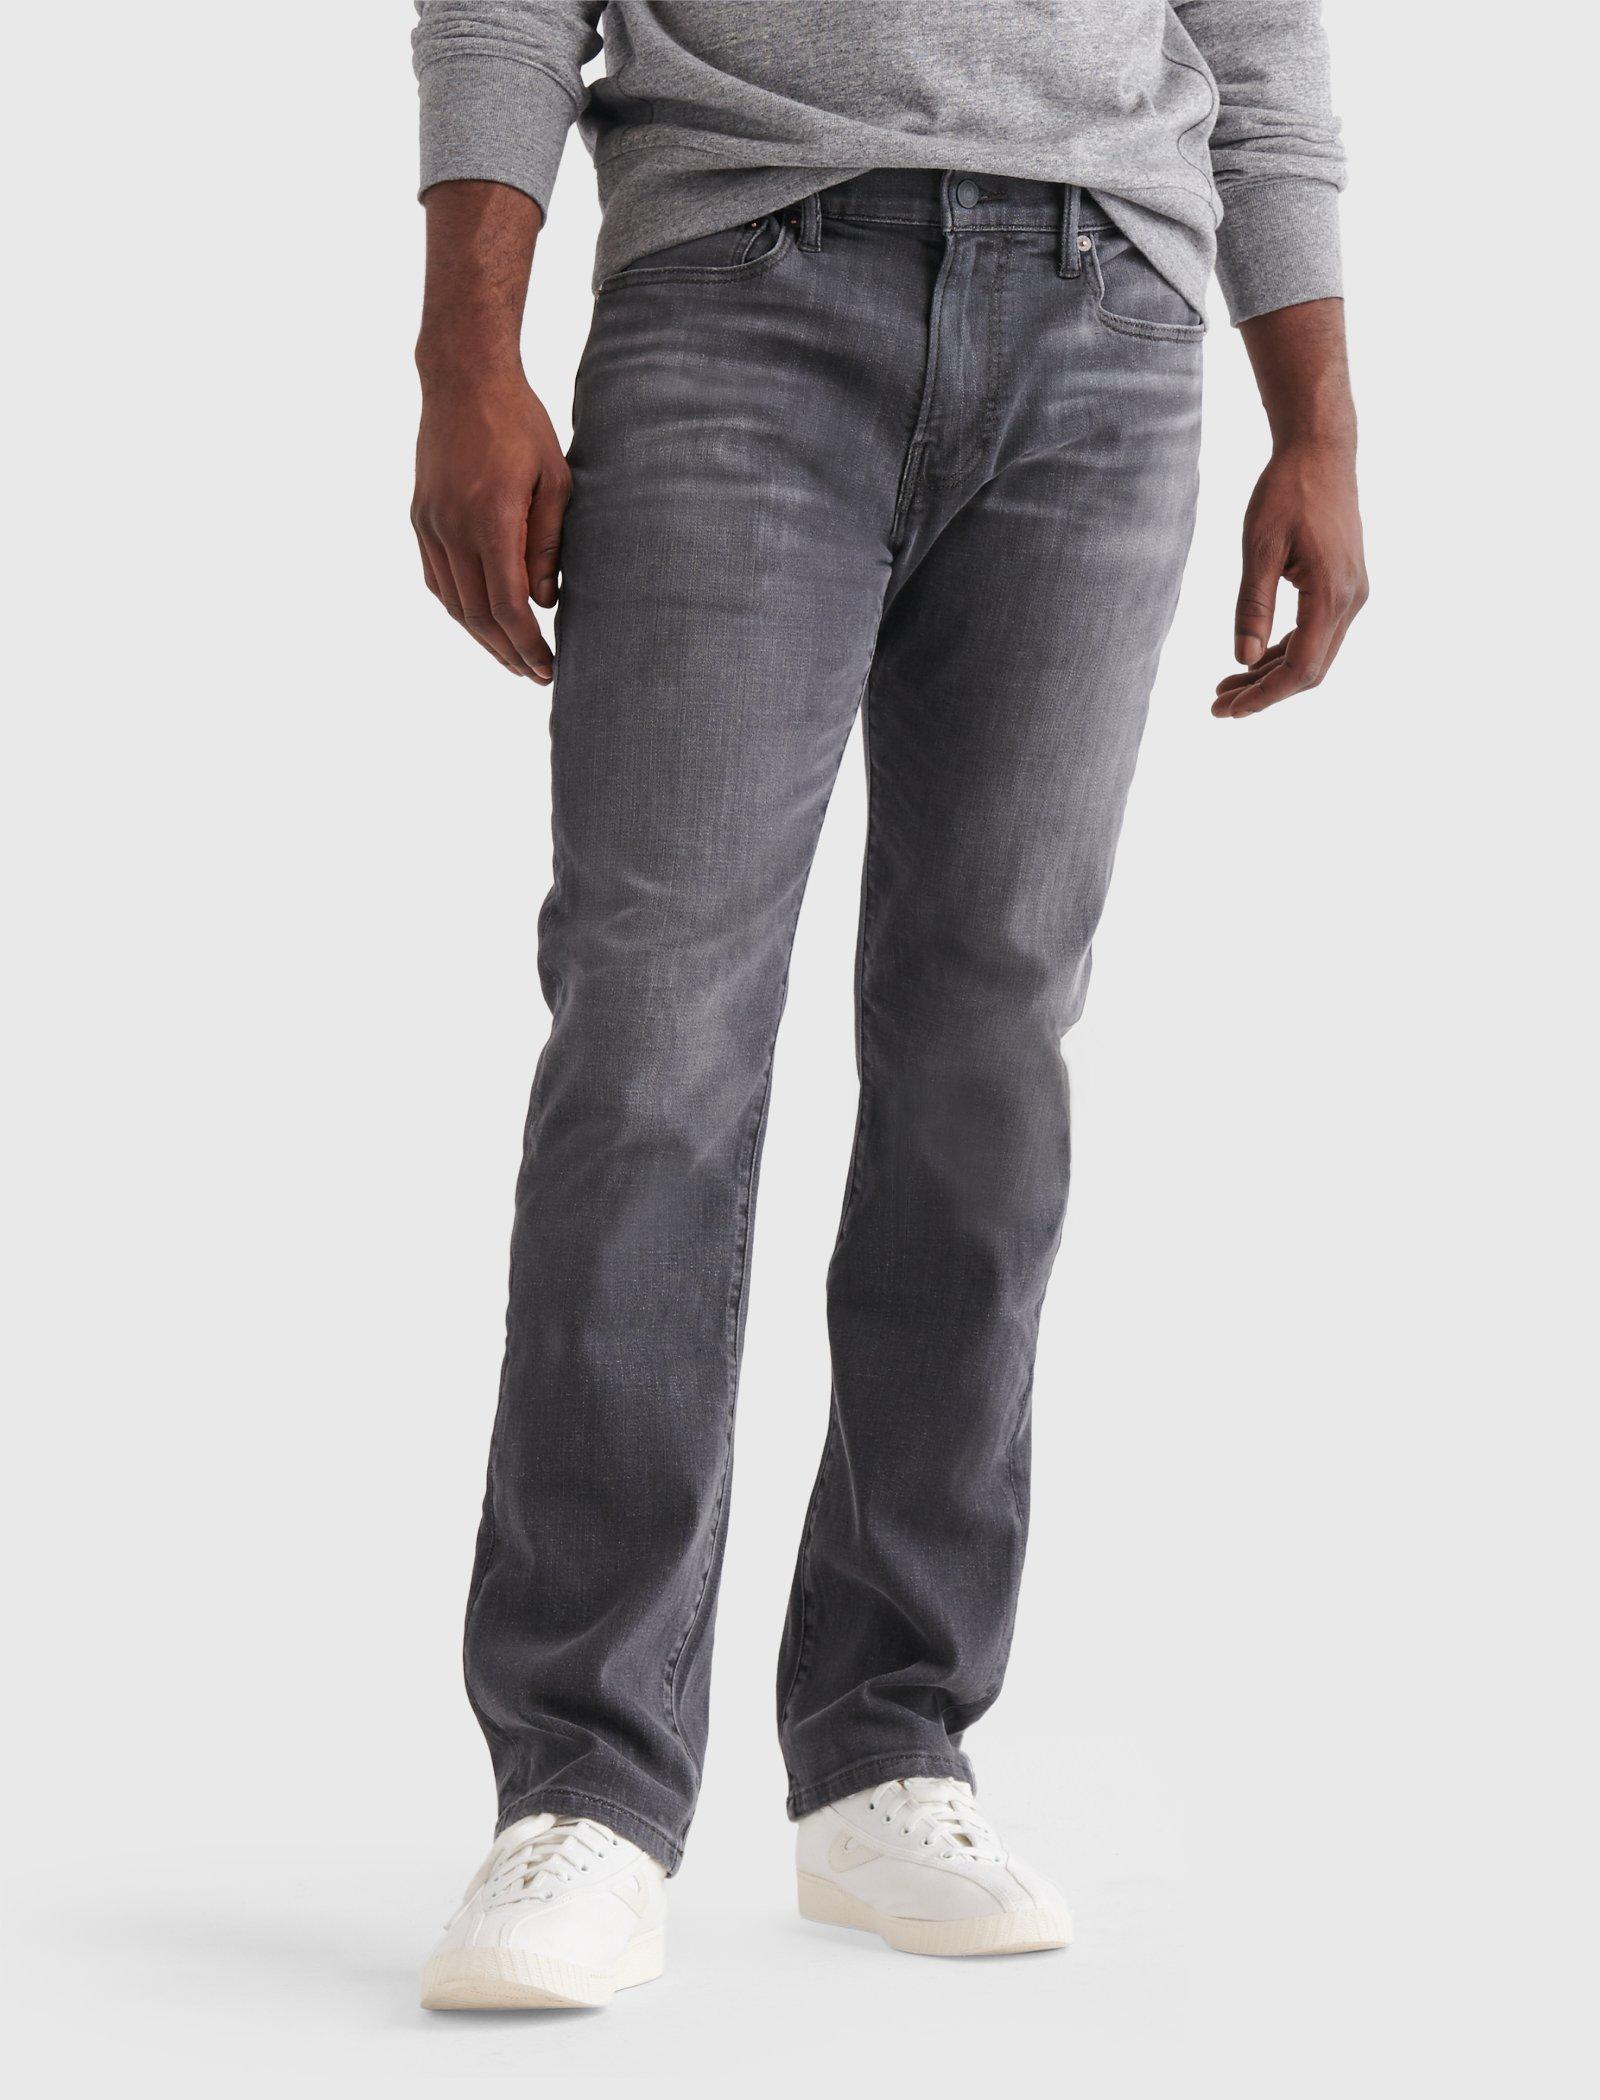 discount mens jeans online